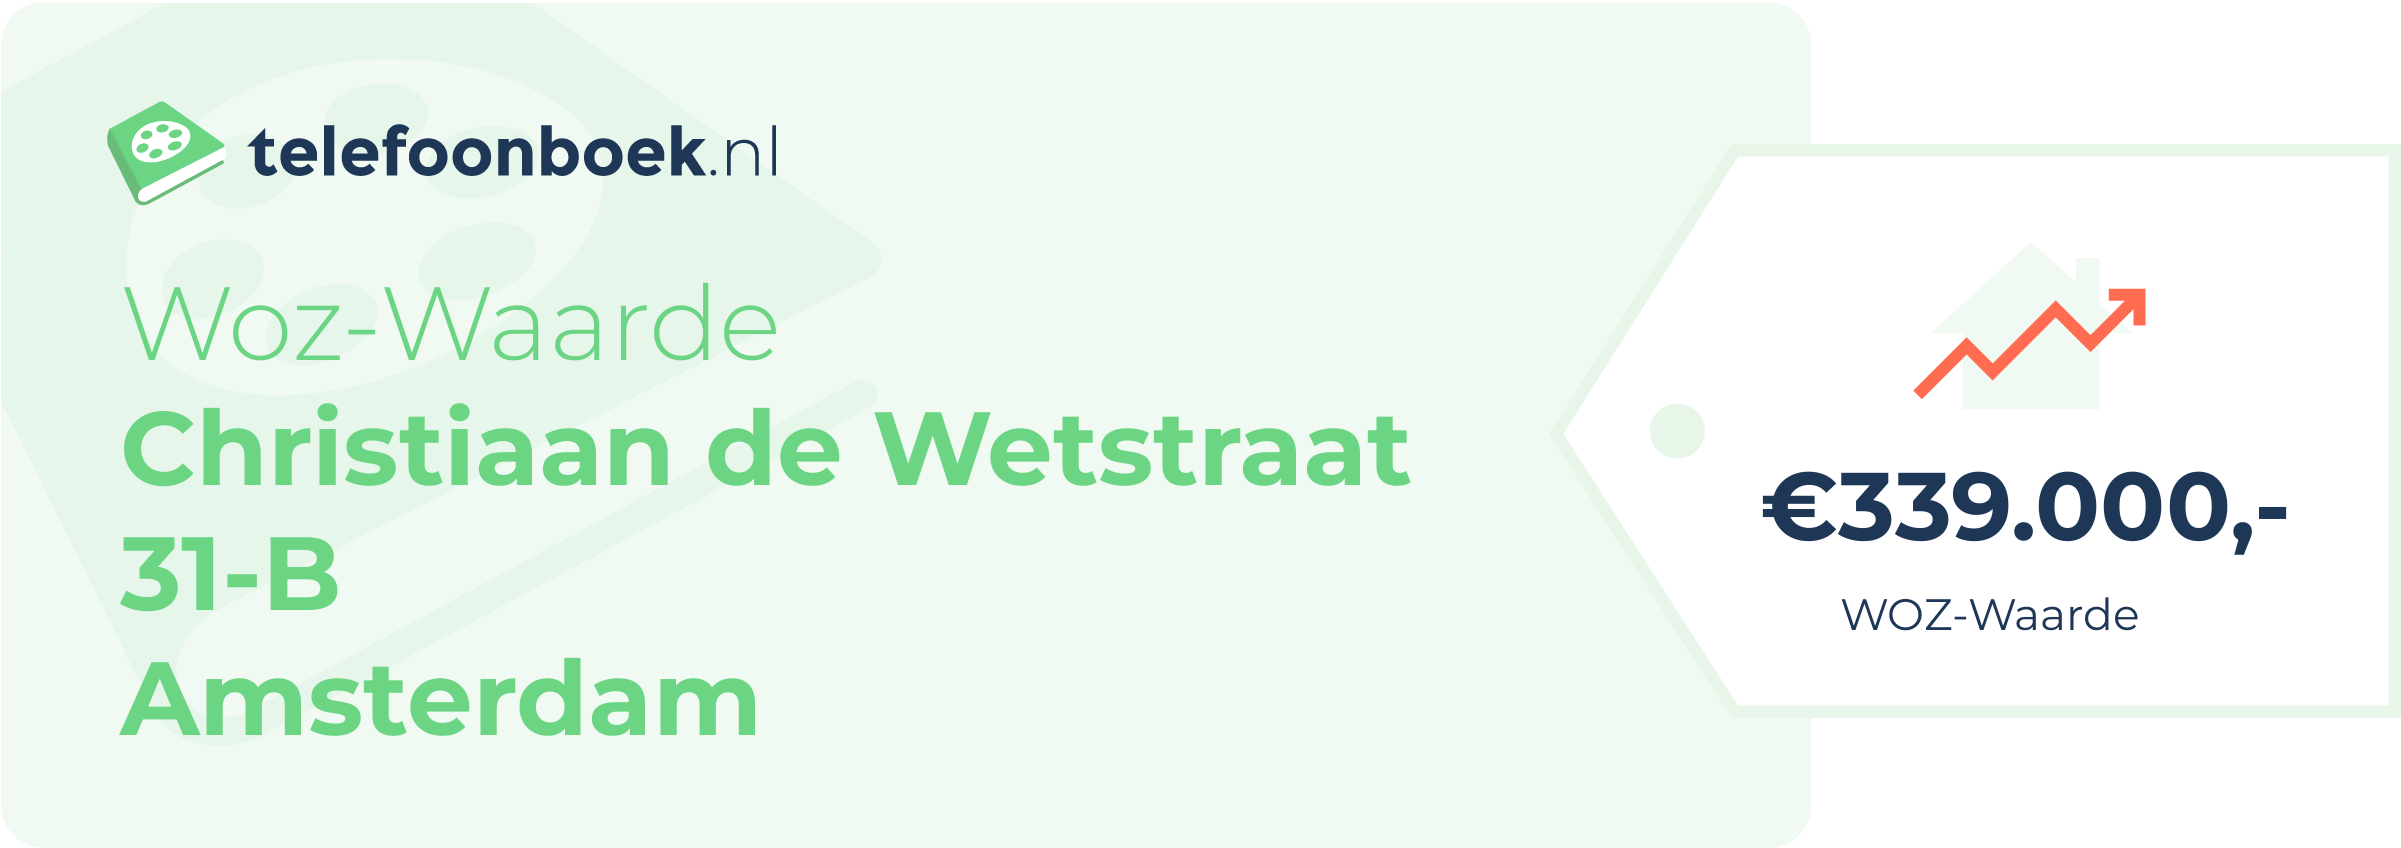 WOZ-waarde Christiaan De Wetstraat 31-B Amsterdam